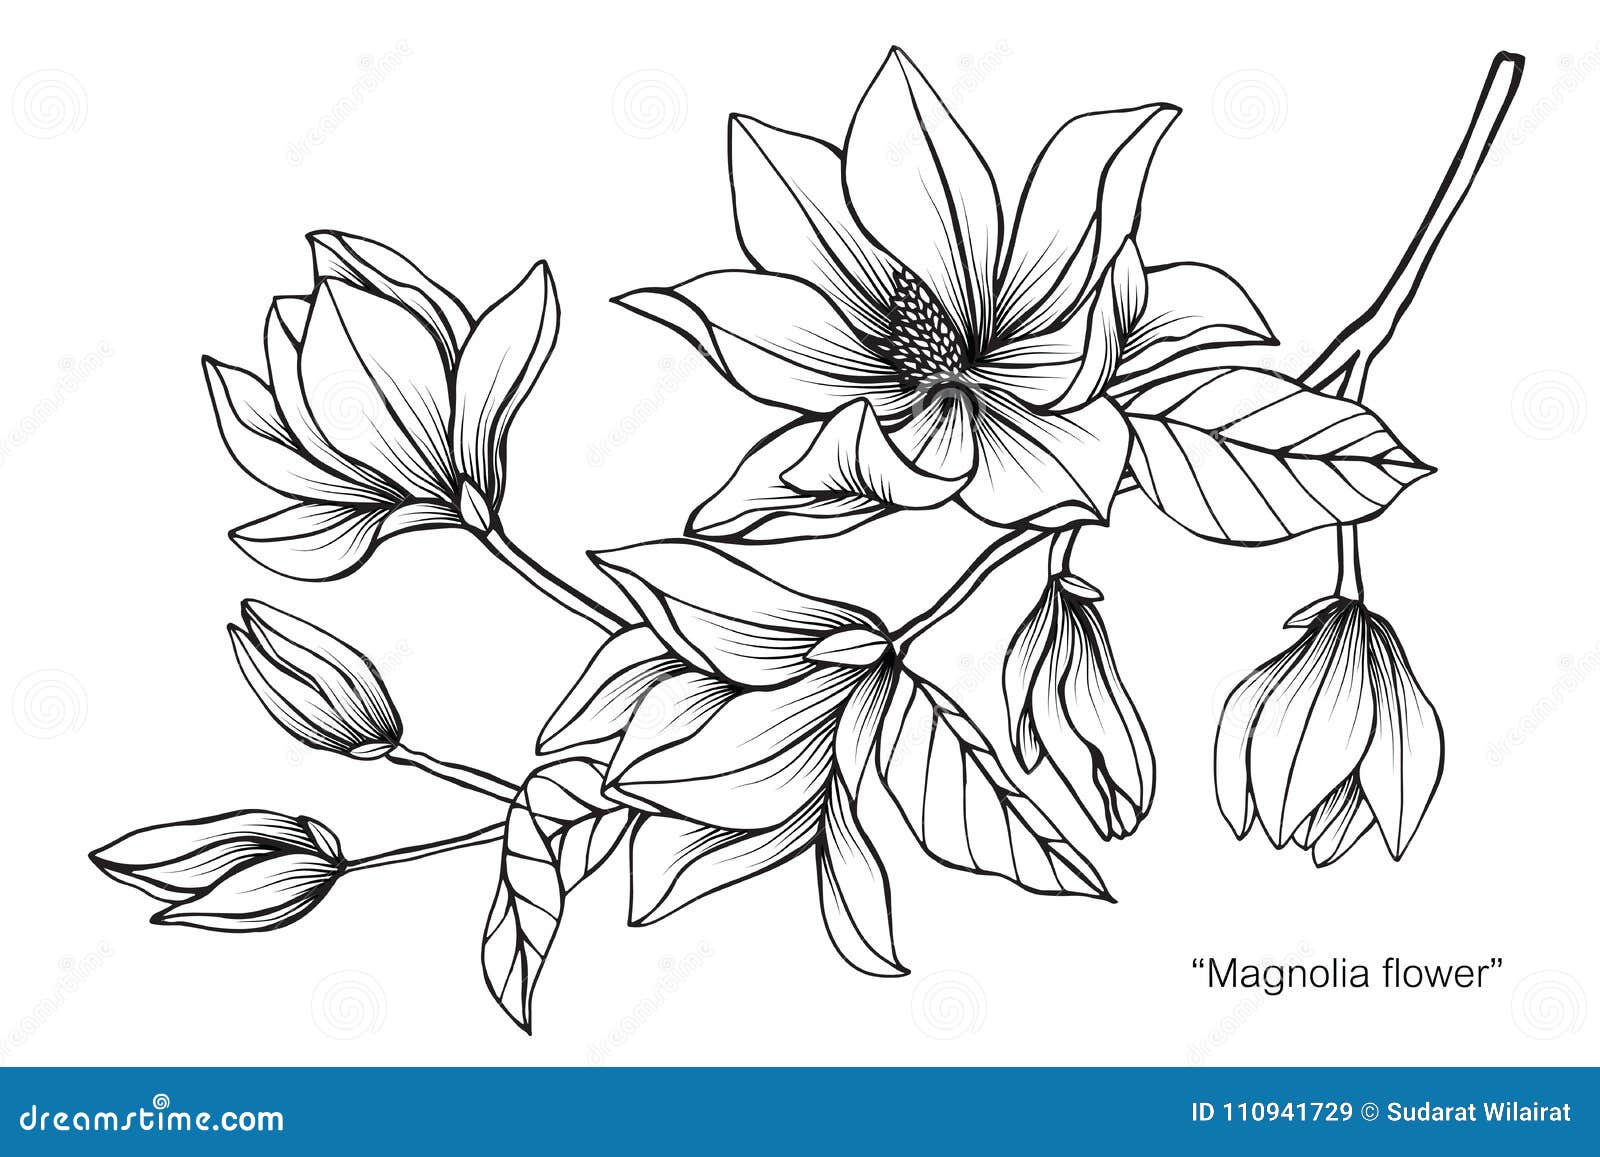 Magnolia flower sketch on white background floral Vector Image